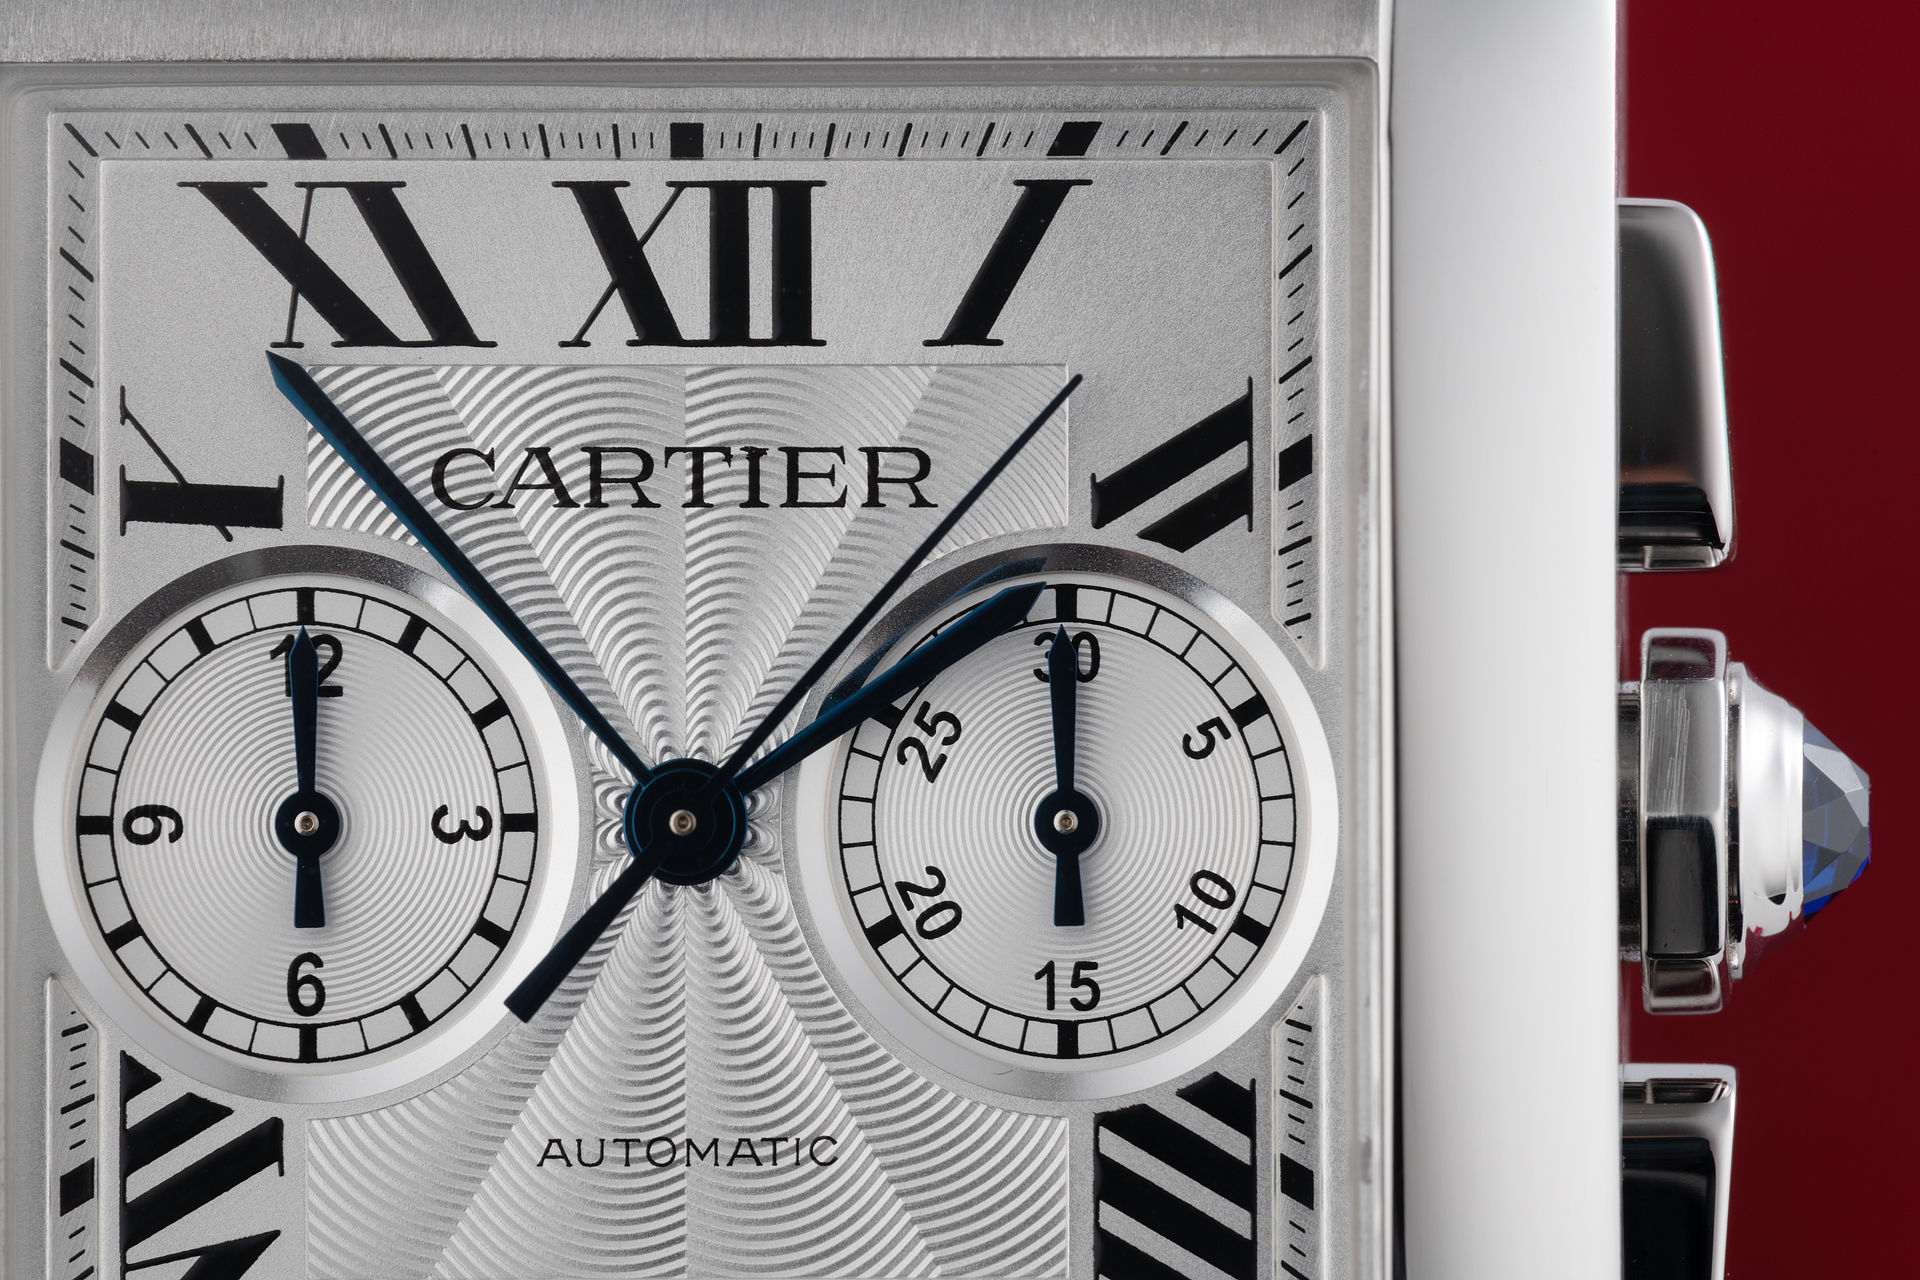 Cartier International Warranty | ref W5330007 | Cartier Tank MC Chronograph